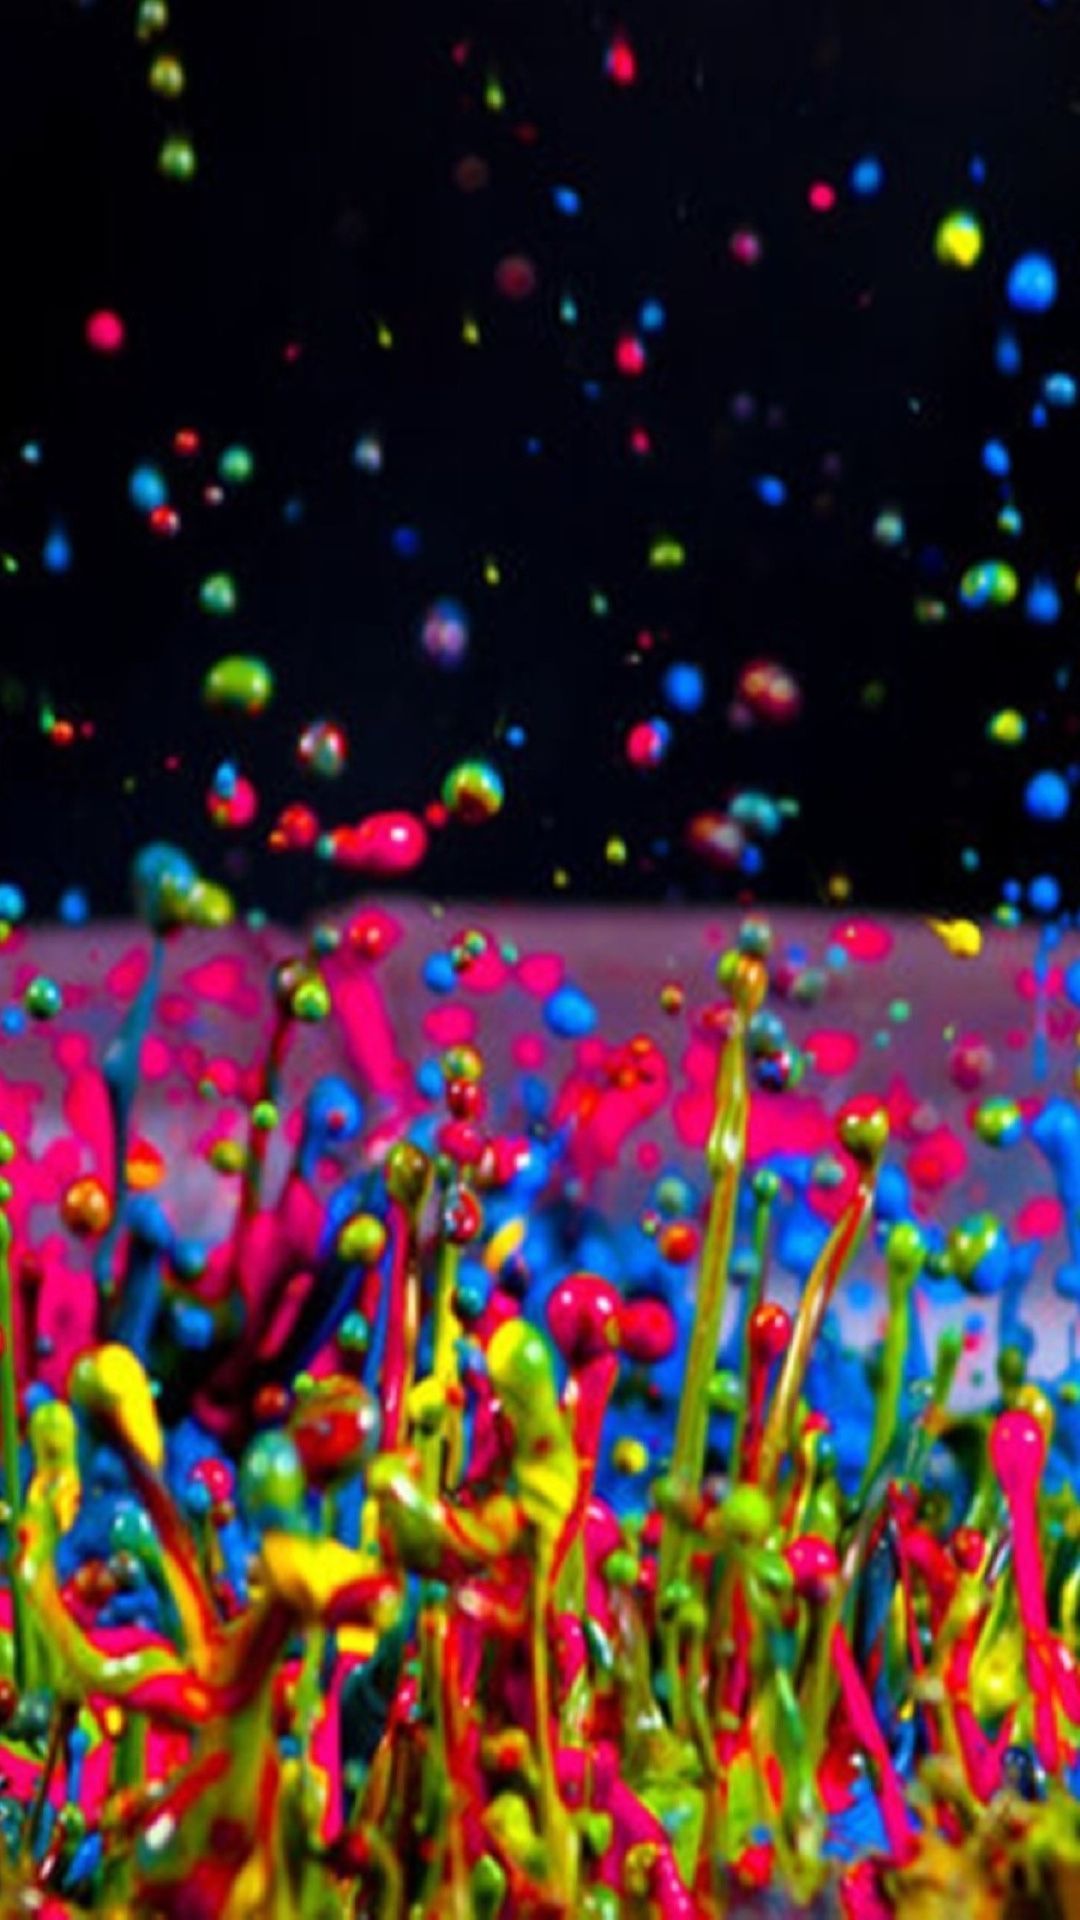 2.-Colorful-Splashing-paint-Drops-10-Stunning-Samsung-Galaxy-S4-Wallpapers.jpg